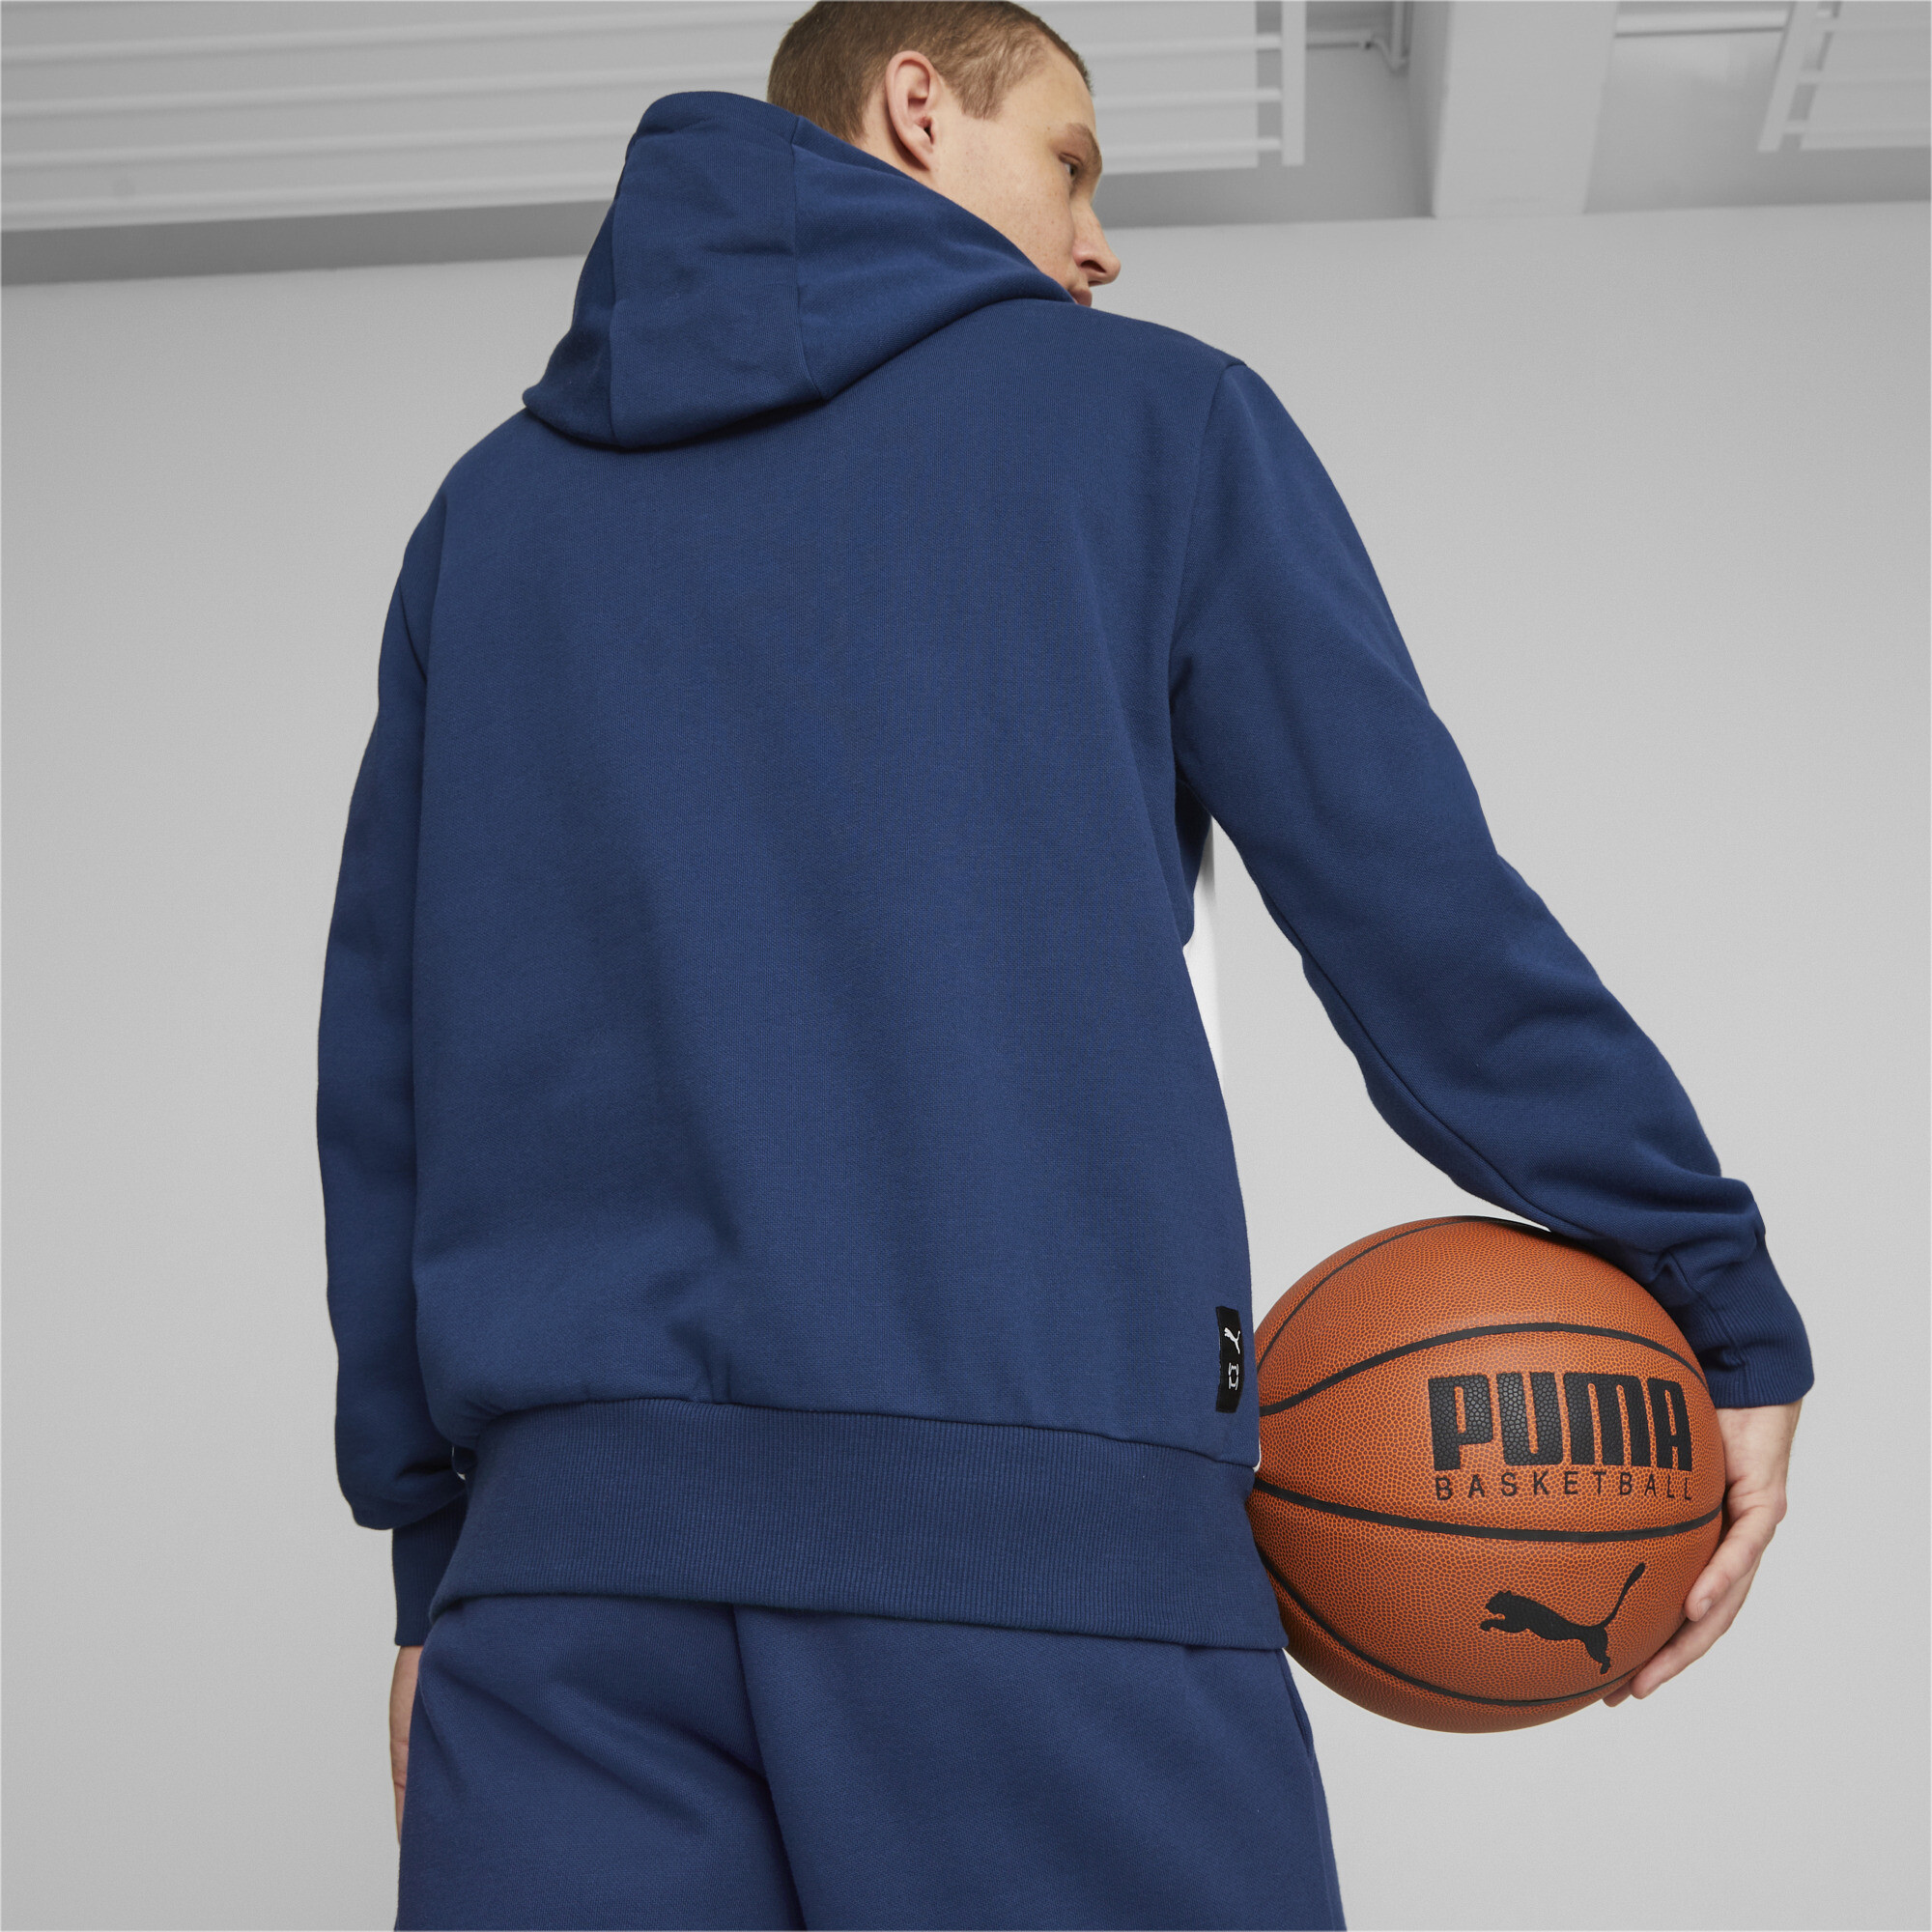 Men's PUMA Blueprint Formstrip Basketball Hoodie, Size Small